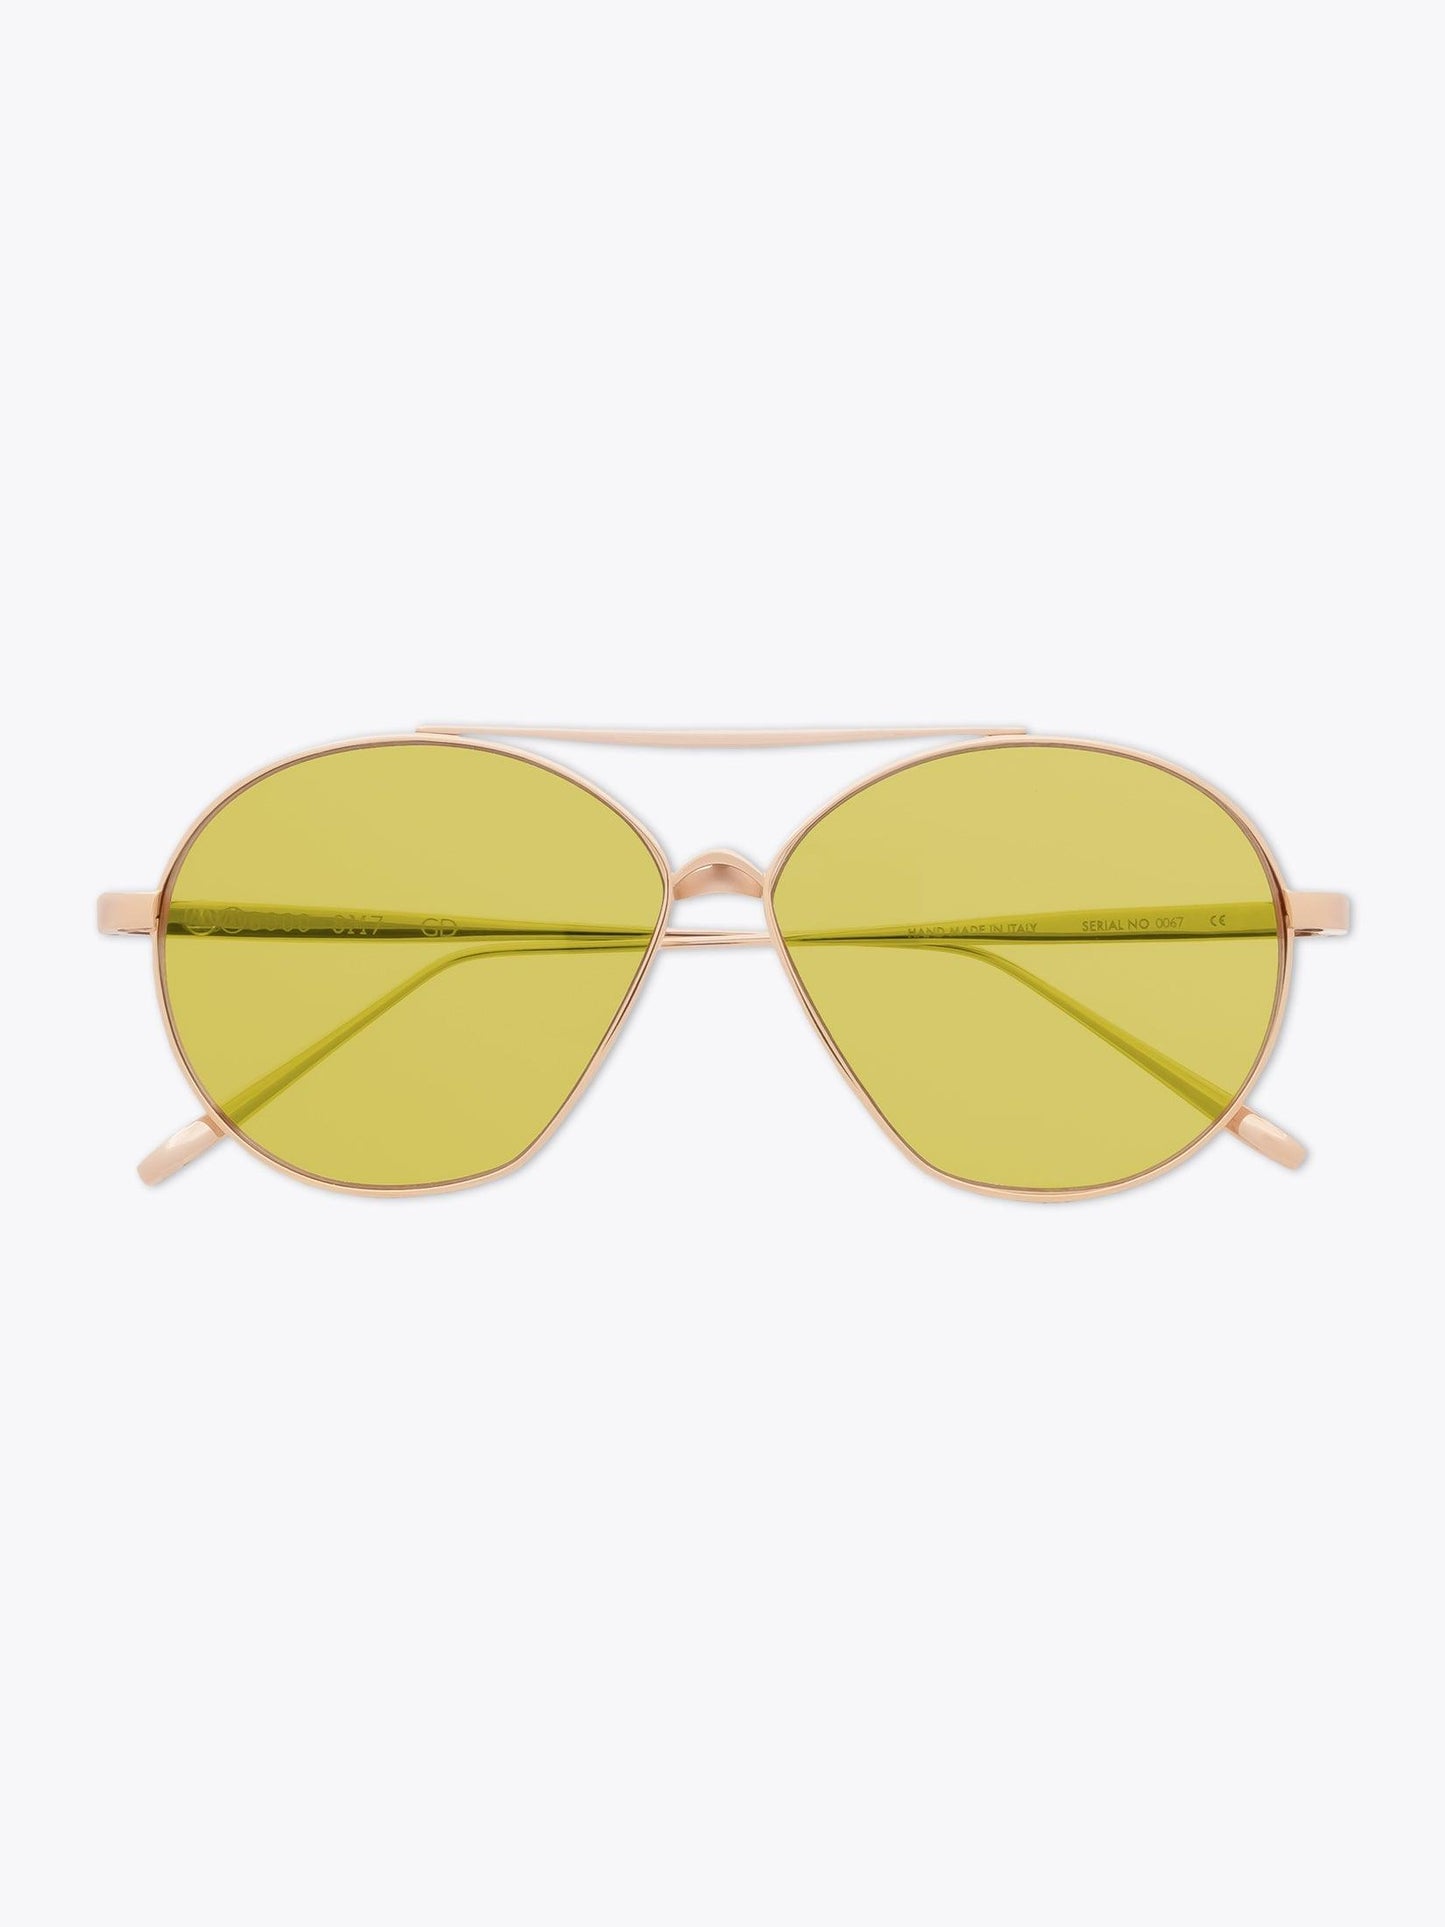 8000 Eyewear 8M7 Gold-Tone Pilot Sunglasses - Apodep.com